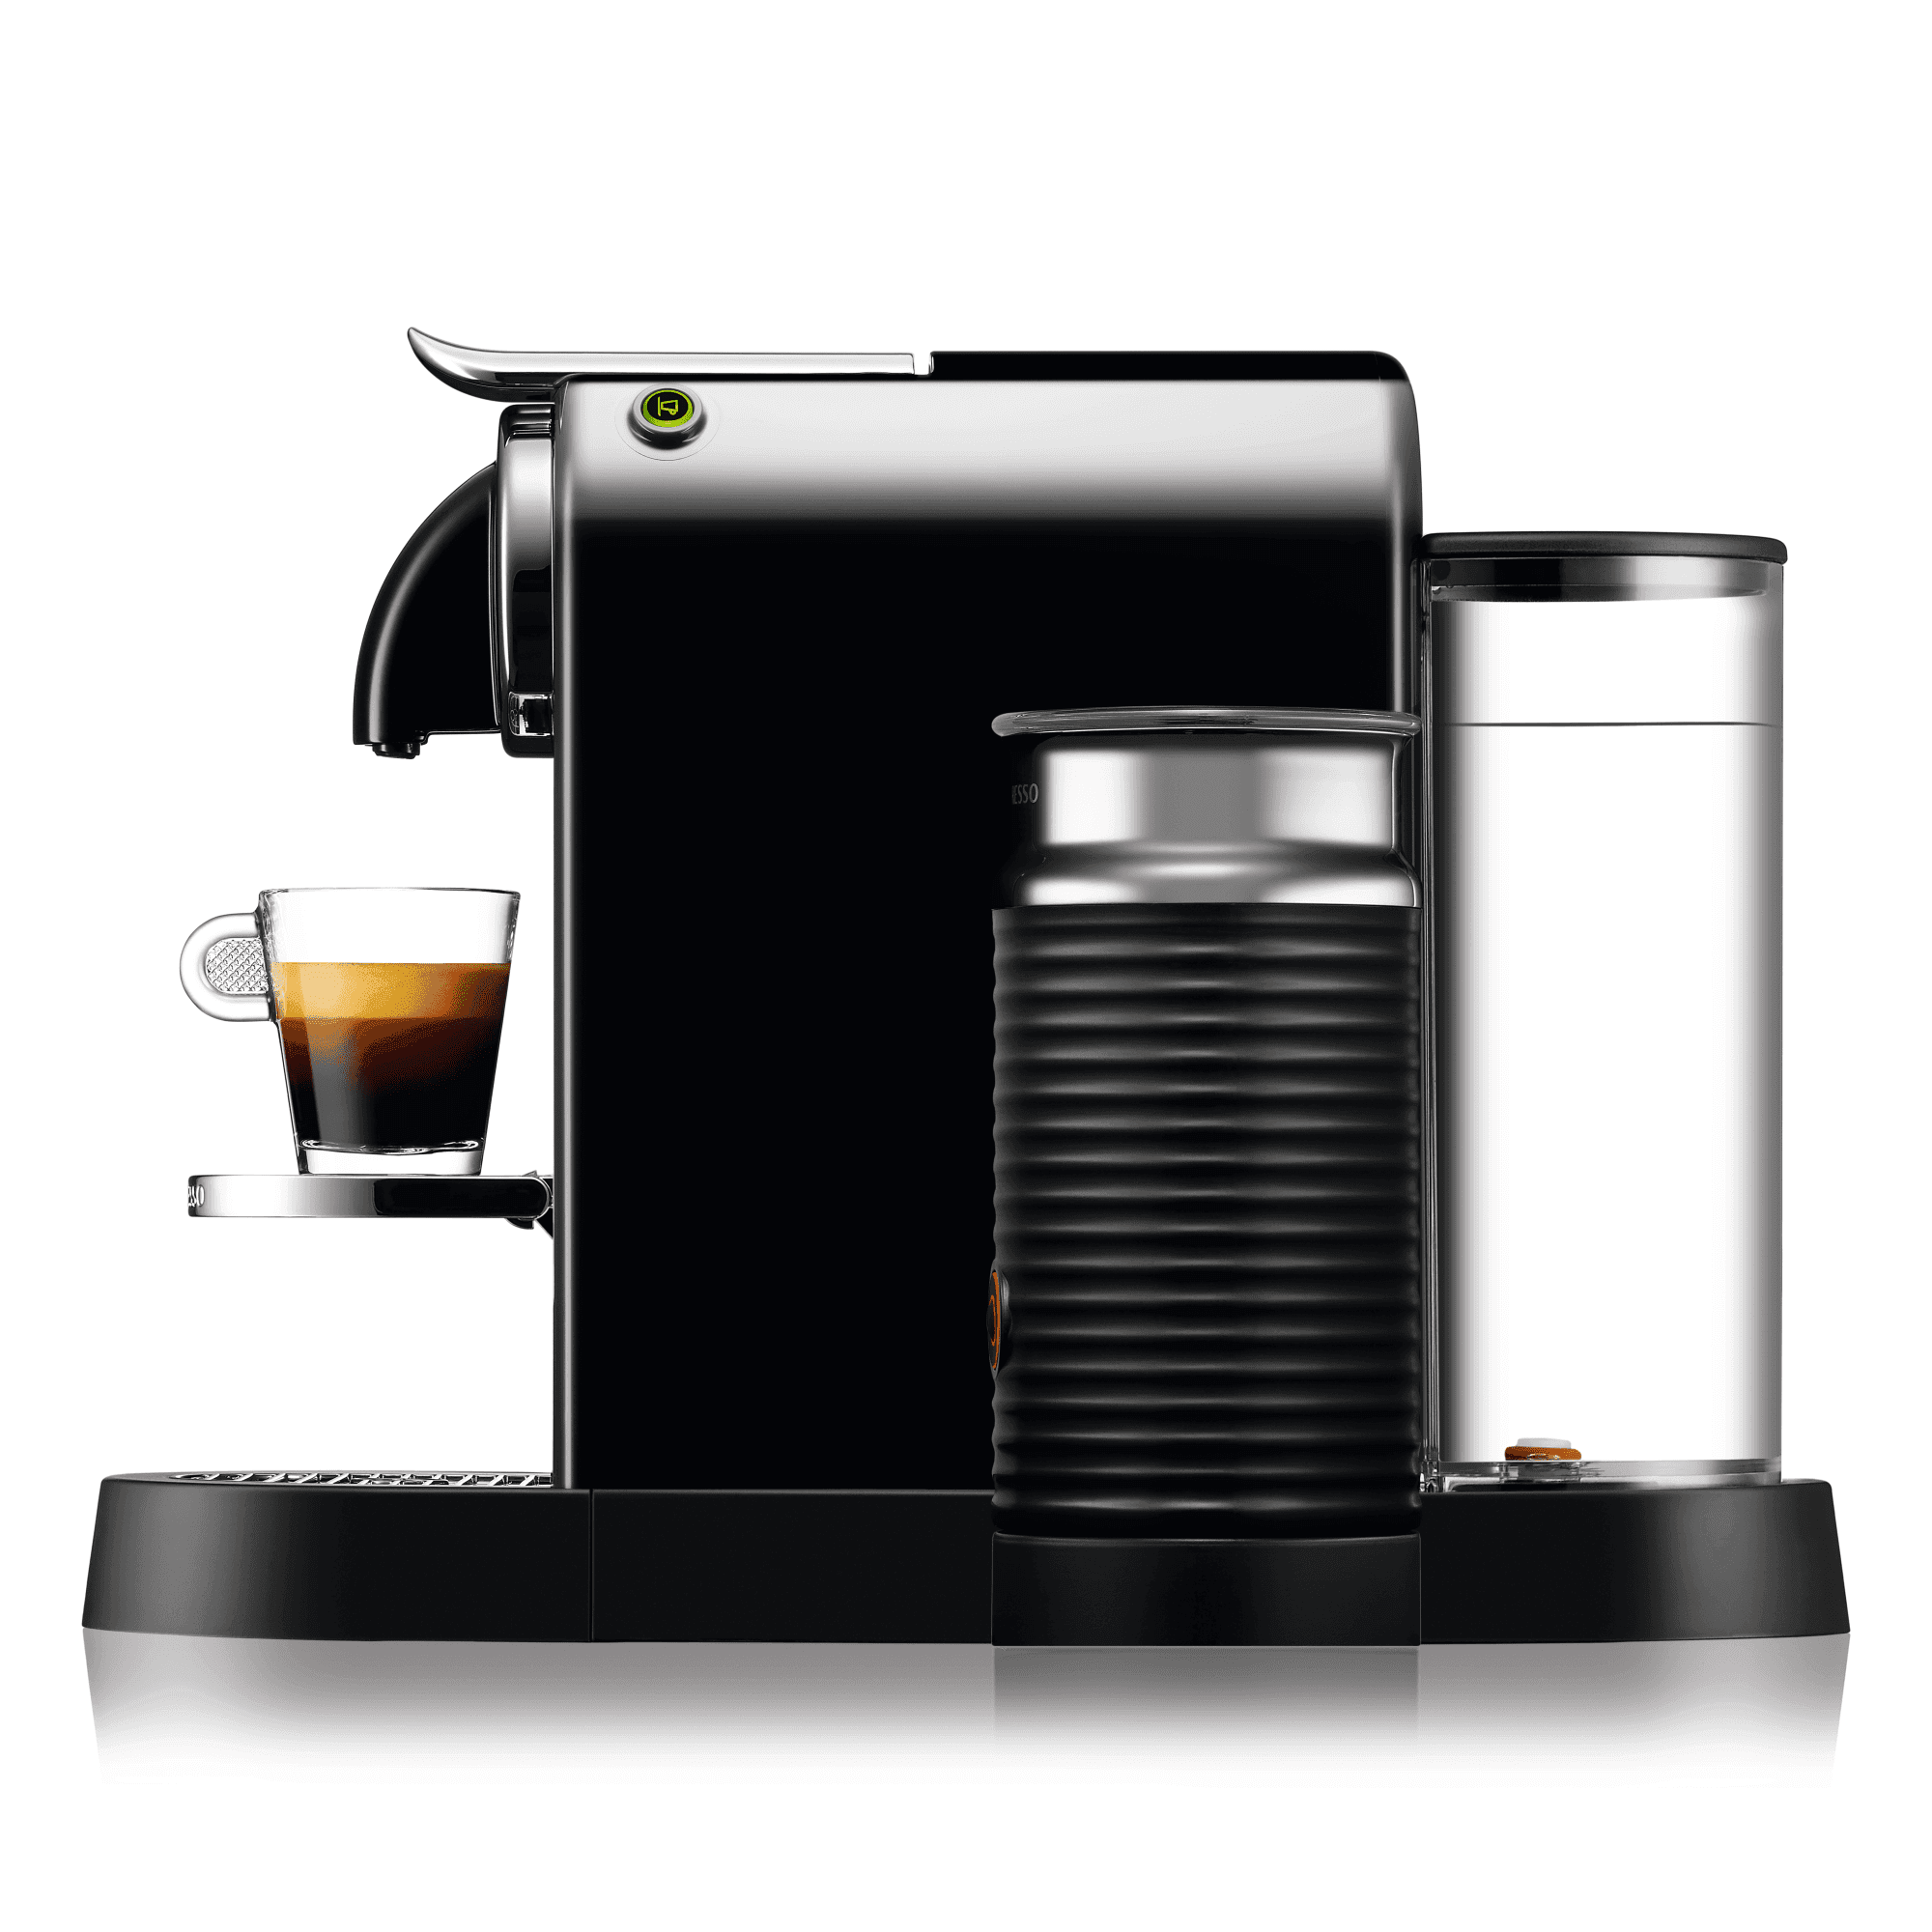 DeLonghi Nespresso Citiz EN267BAE Coffee Machine with Milk Frother Black Image 3